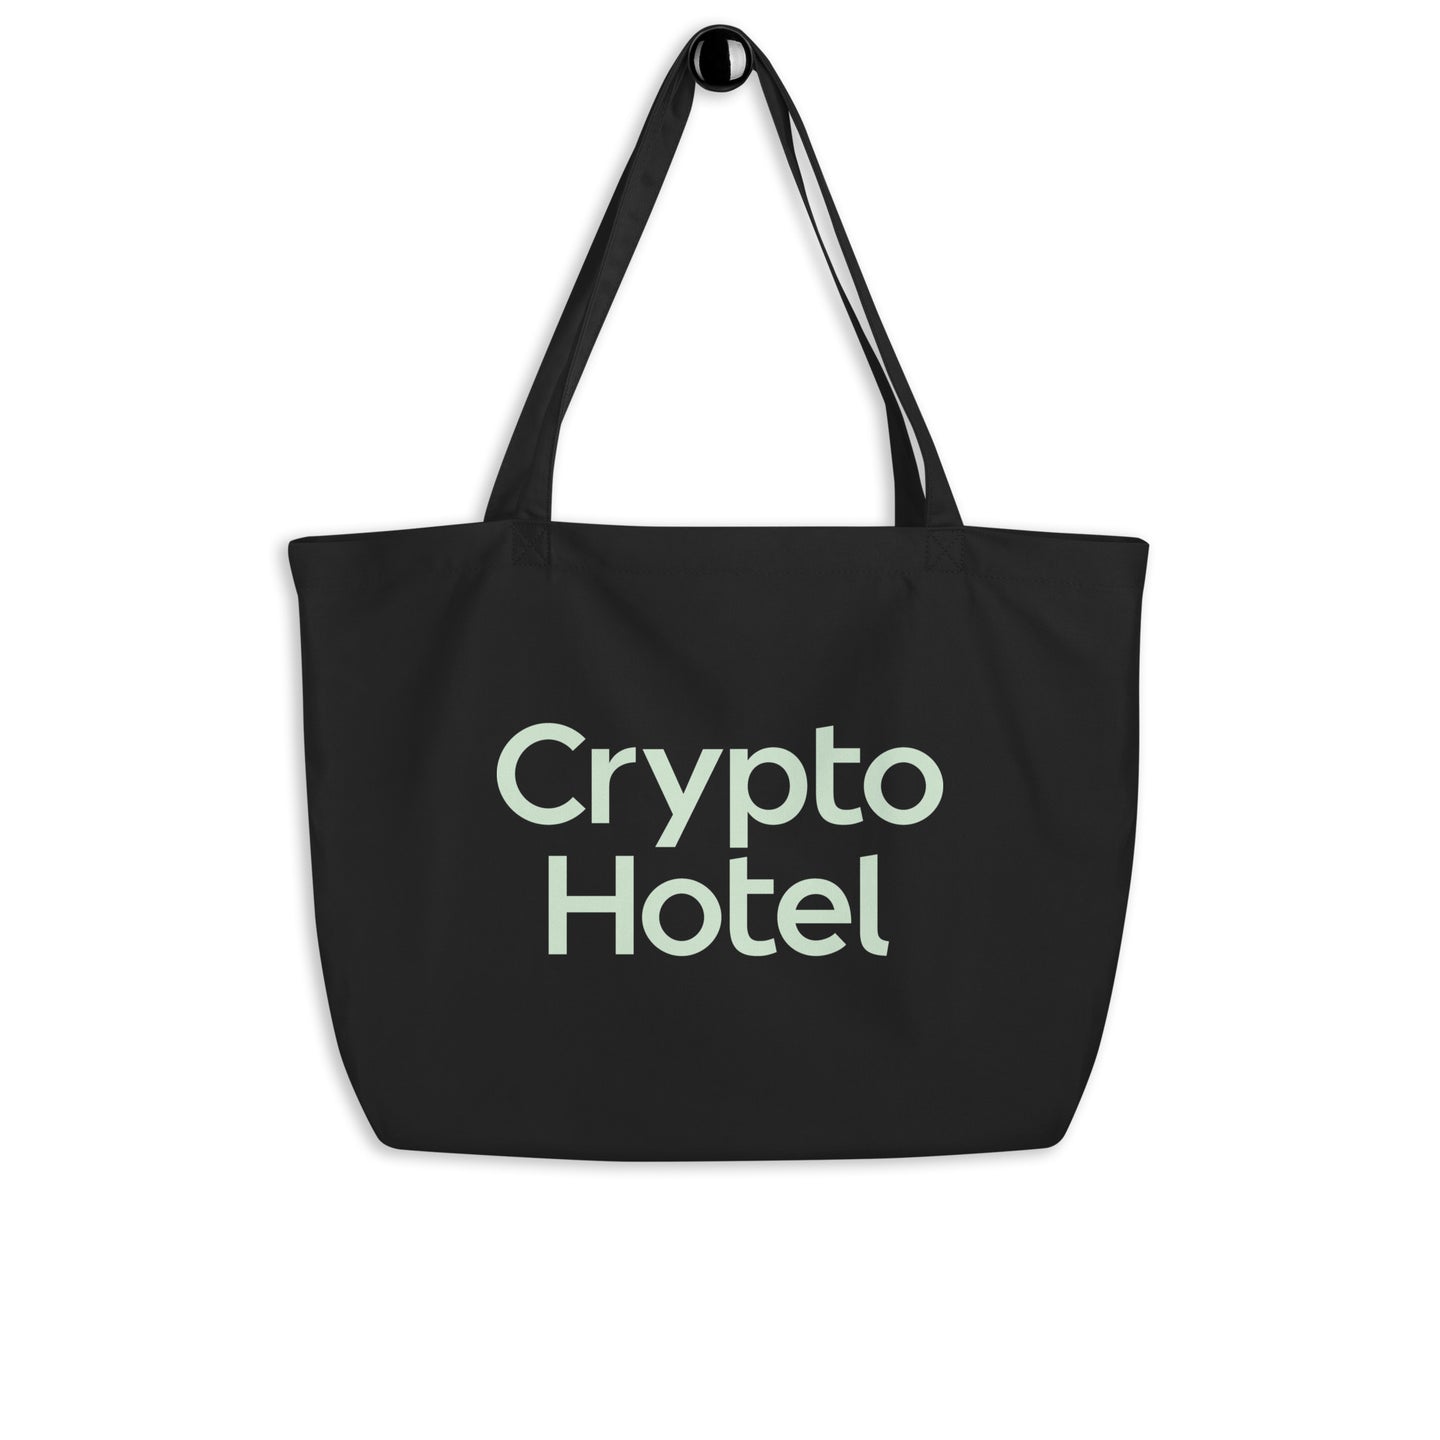 Crypto Hotel Large organic tote bag